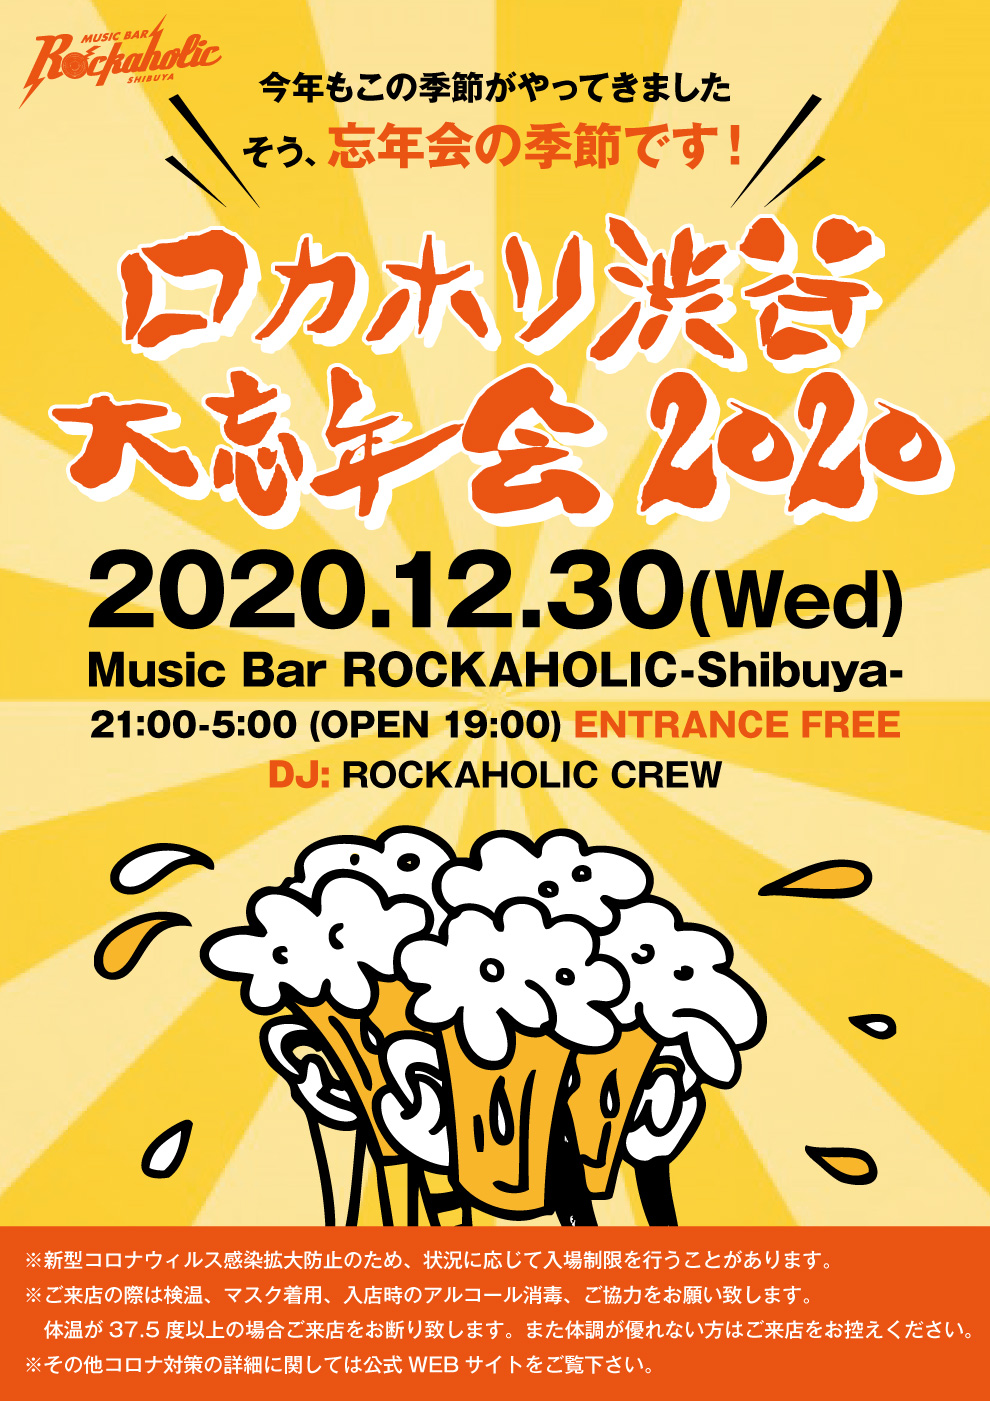 https://bar-rockaholic.jp/shibuya/blog/A836BB8D-72EC-413D-BC74-C84A48EAFAF6.jpeg